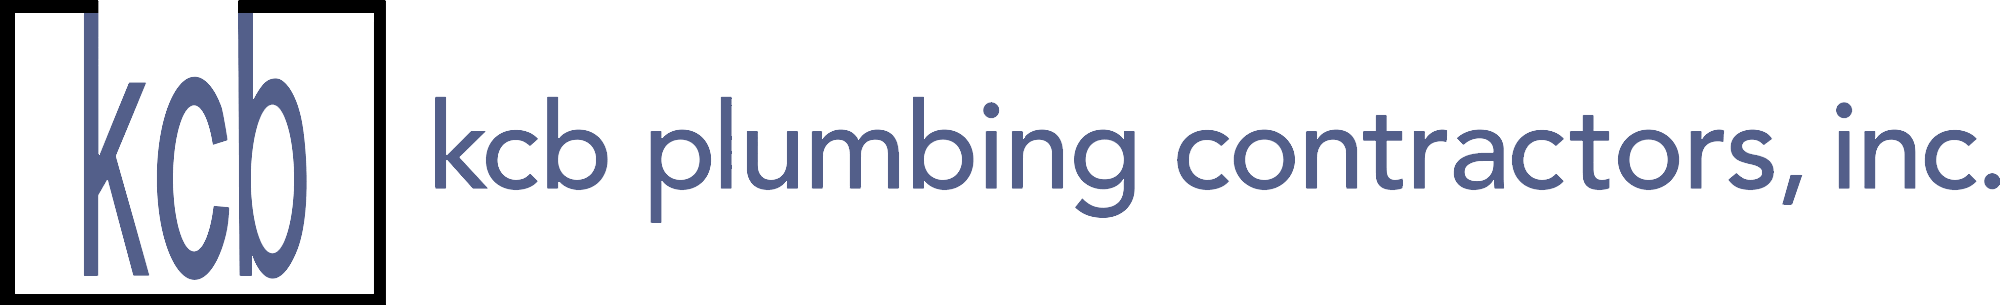 Plumbing contractor and plumbing service Logo